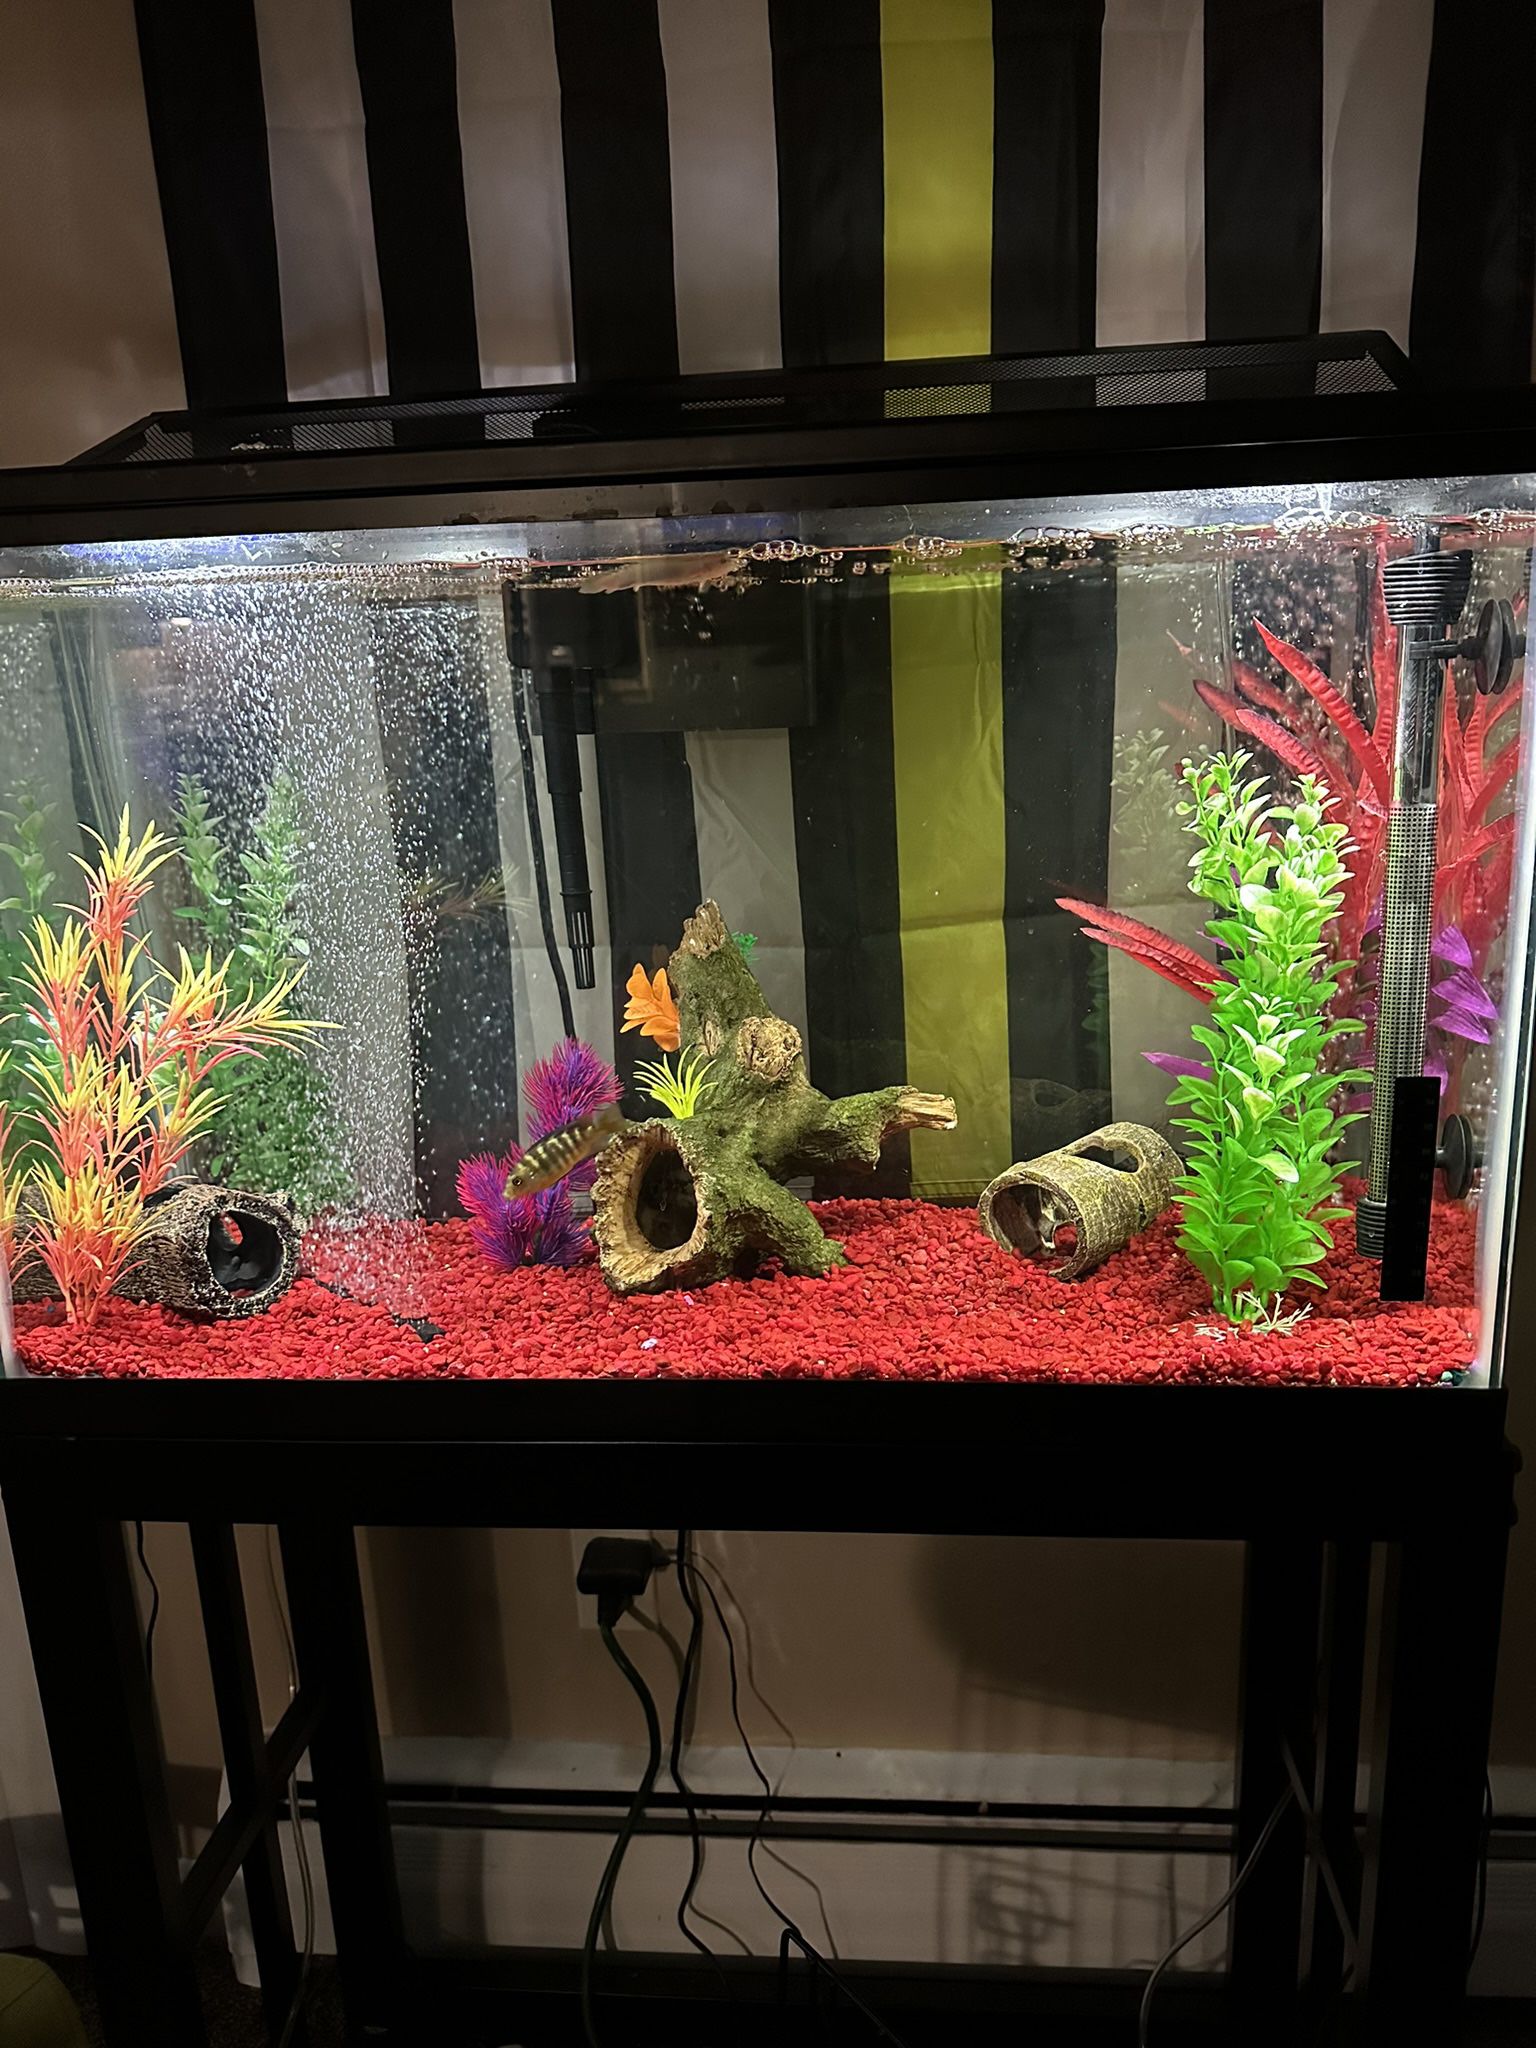 30 Gallon Aquarium Fish Tank (Set Up)